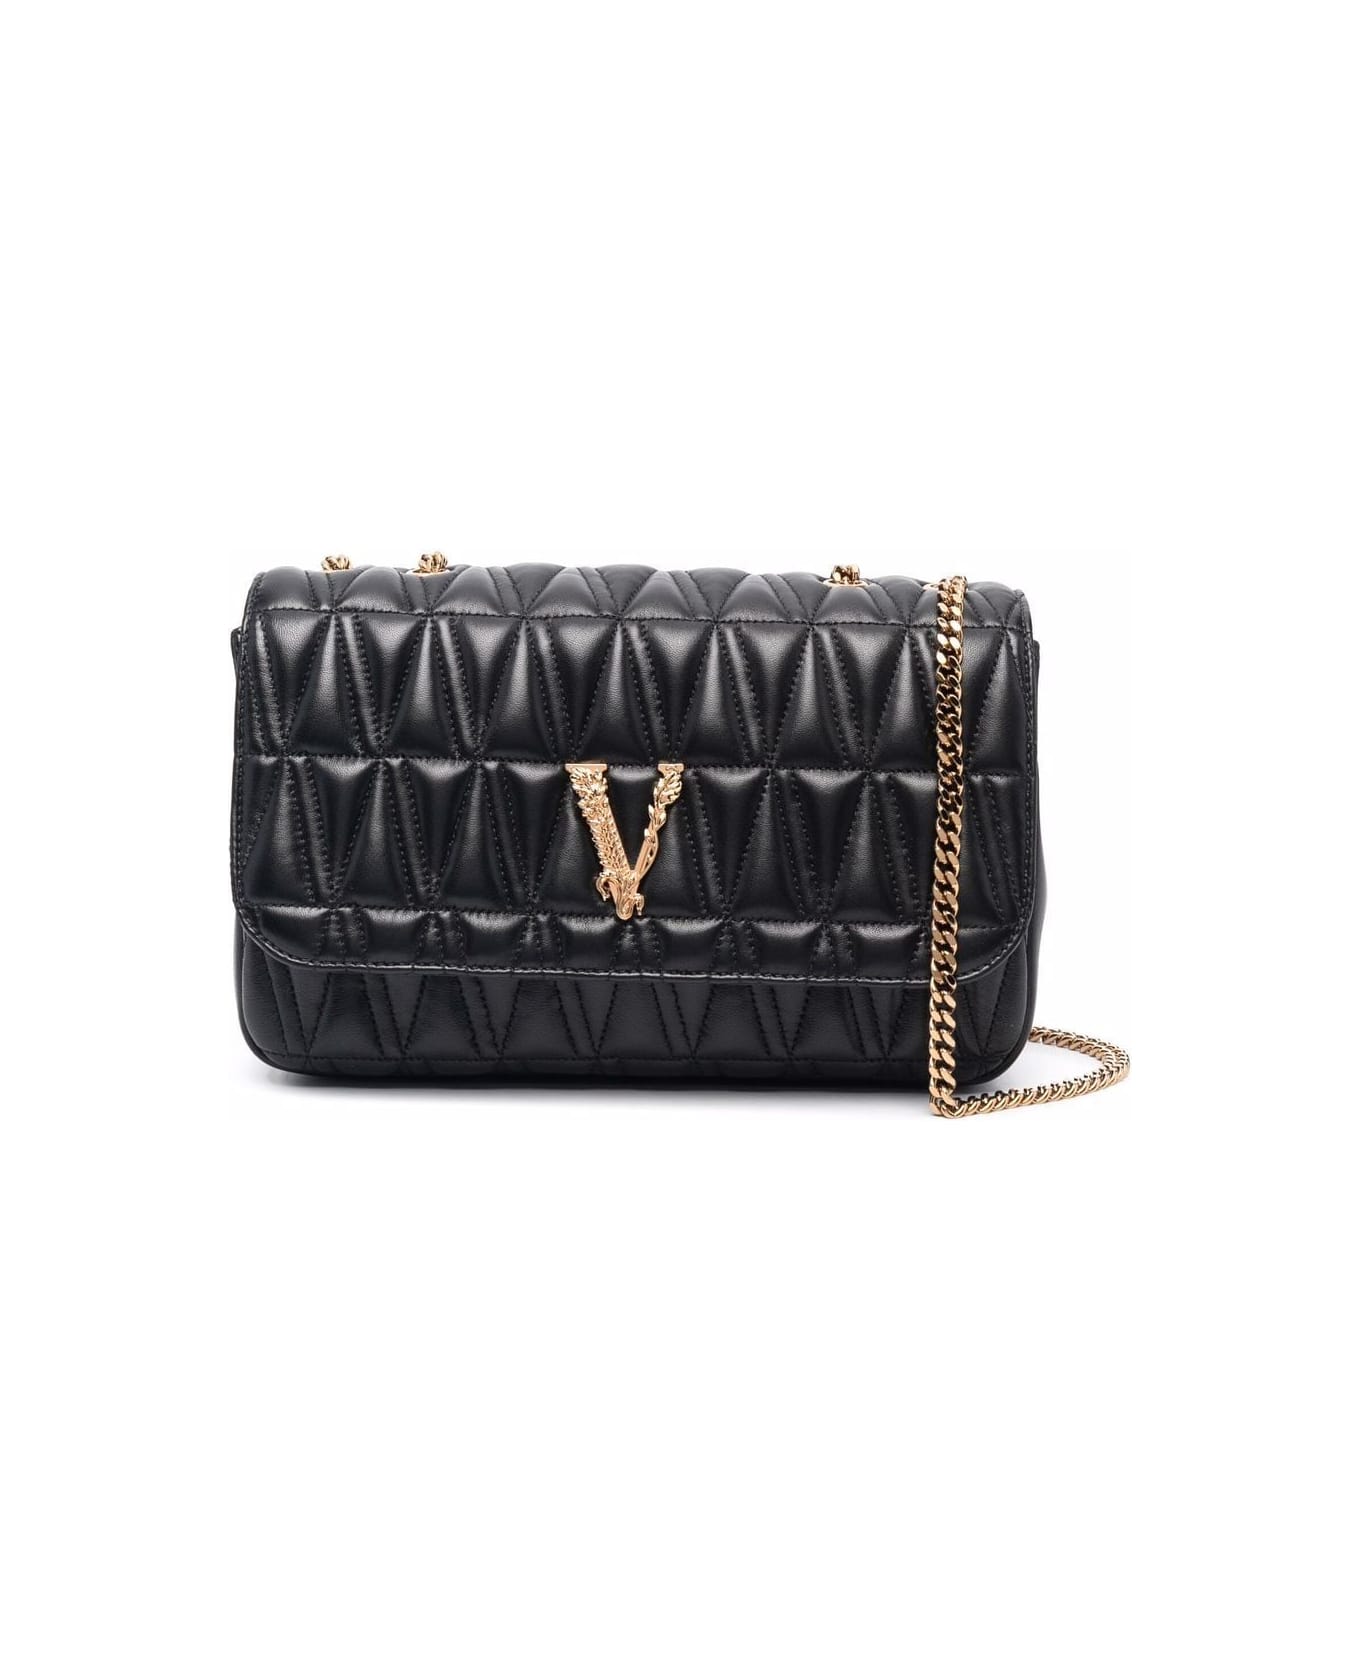 Versace Virtus - Shoulder bag for Woman - Black - DBFH822D2NTRT-DNMOV